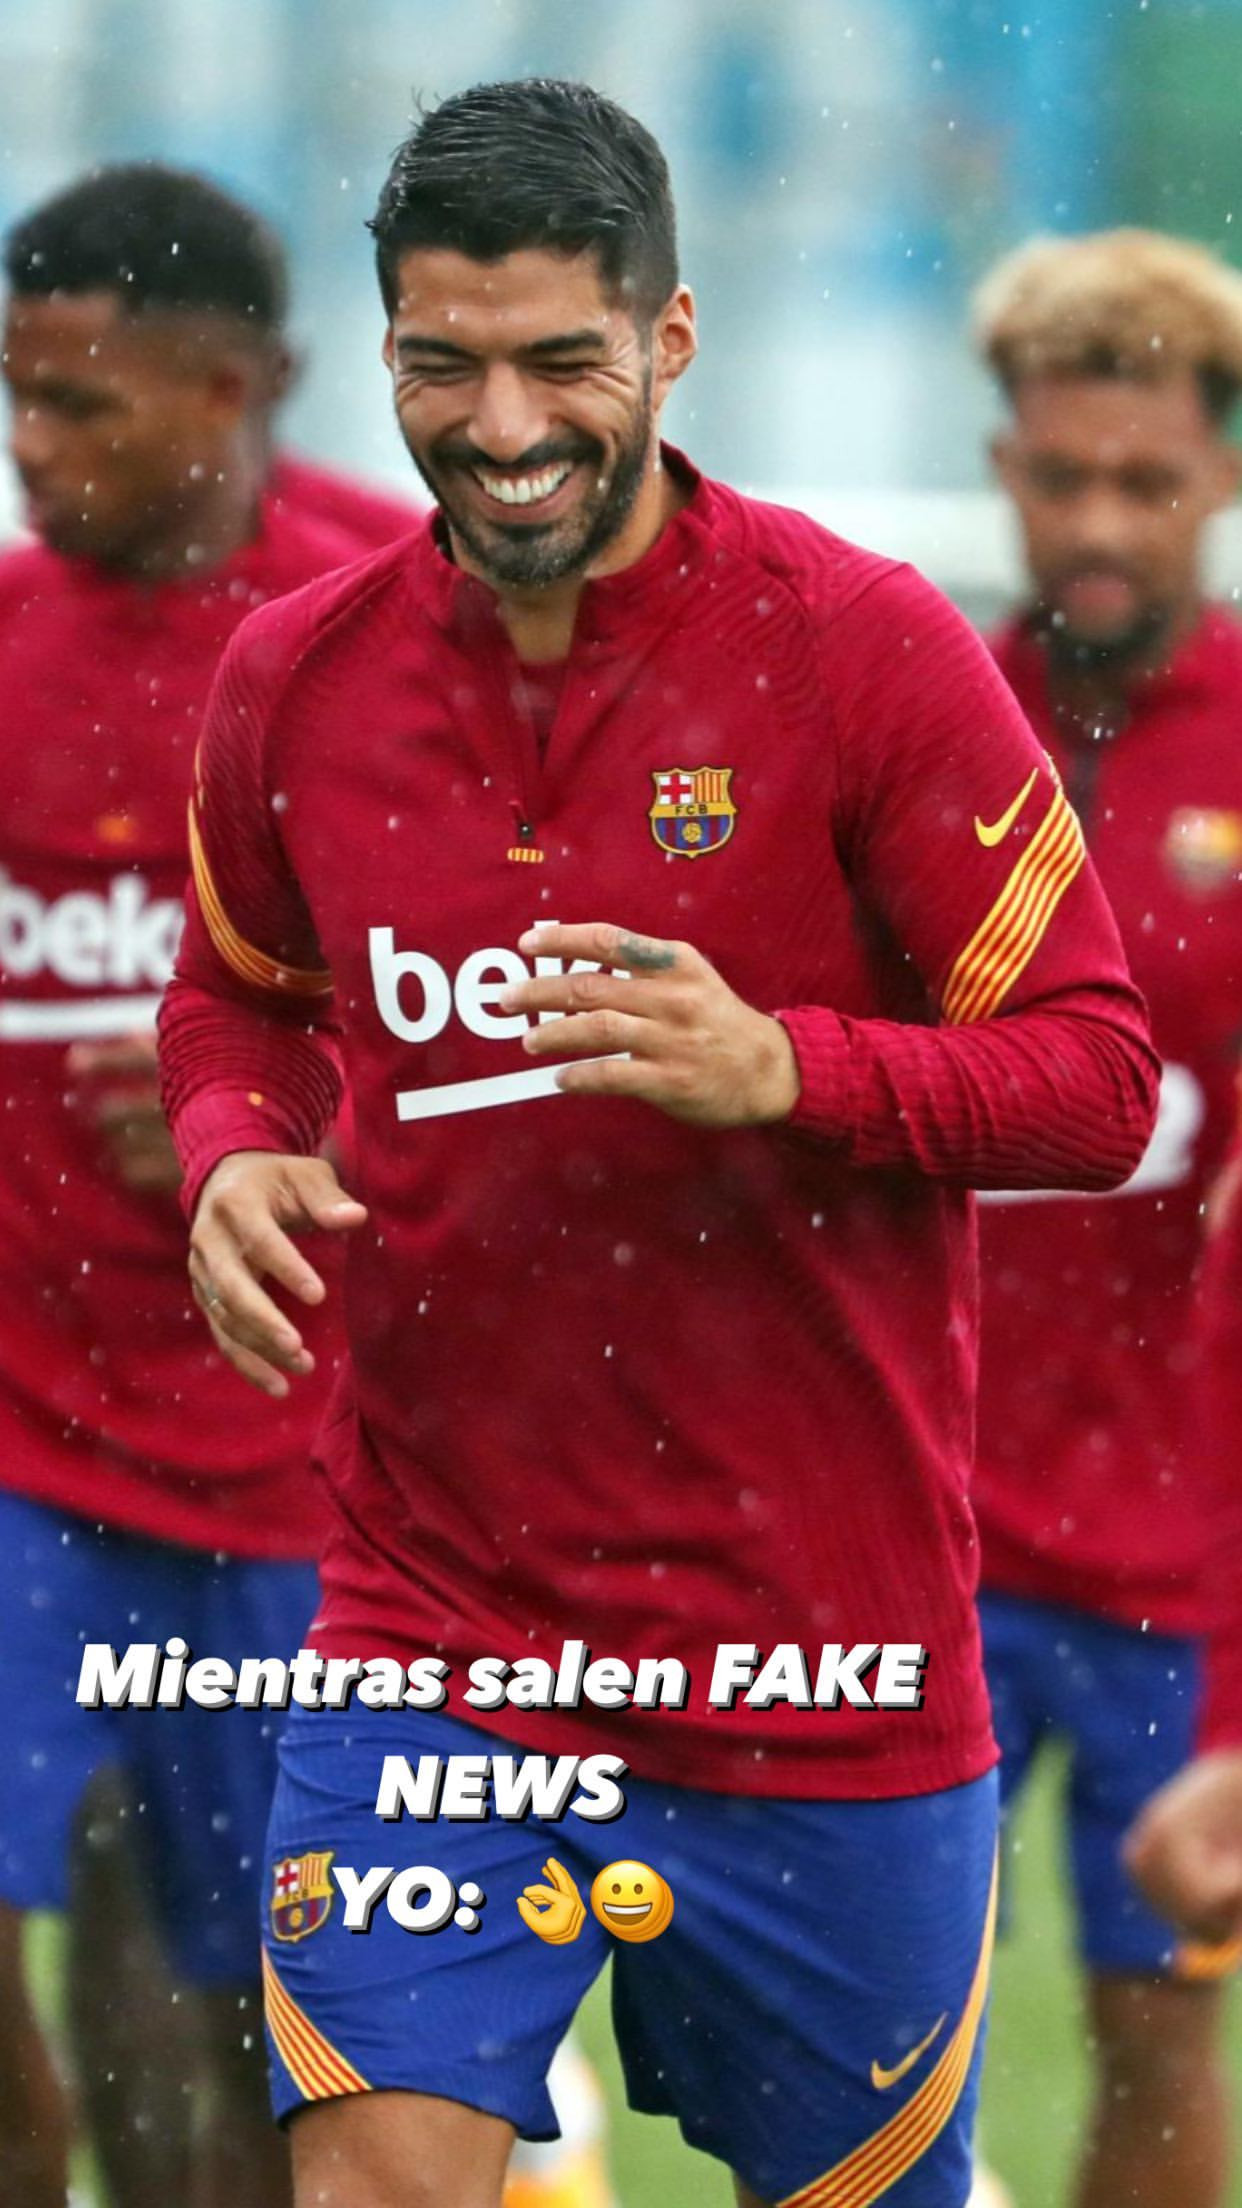 Luis Suárez fake news / INSTAGRAM